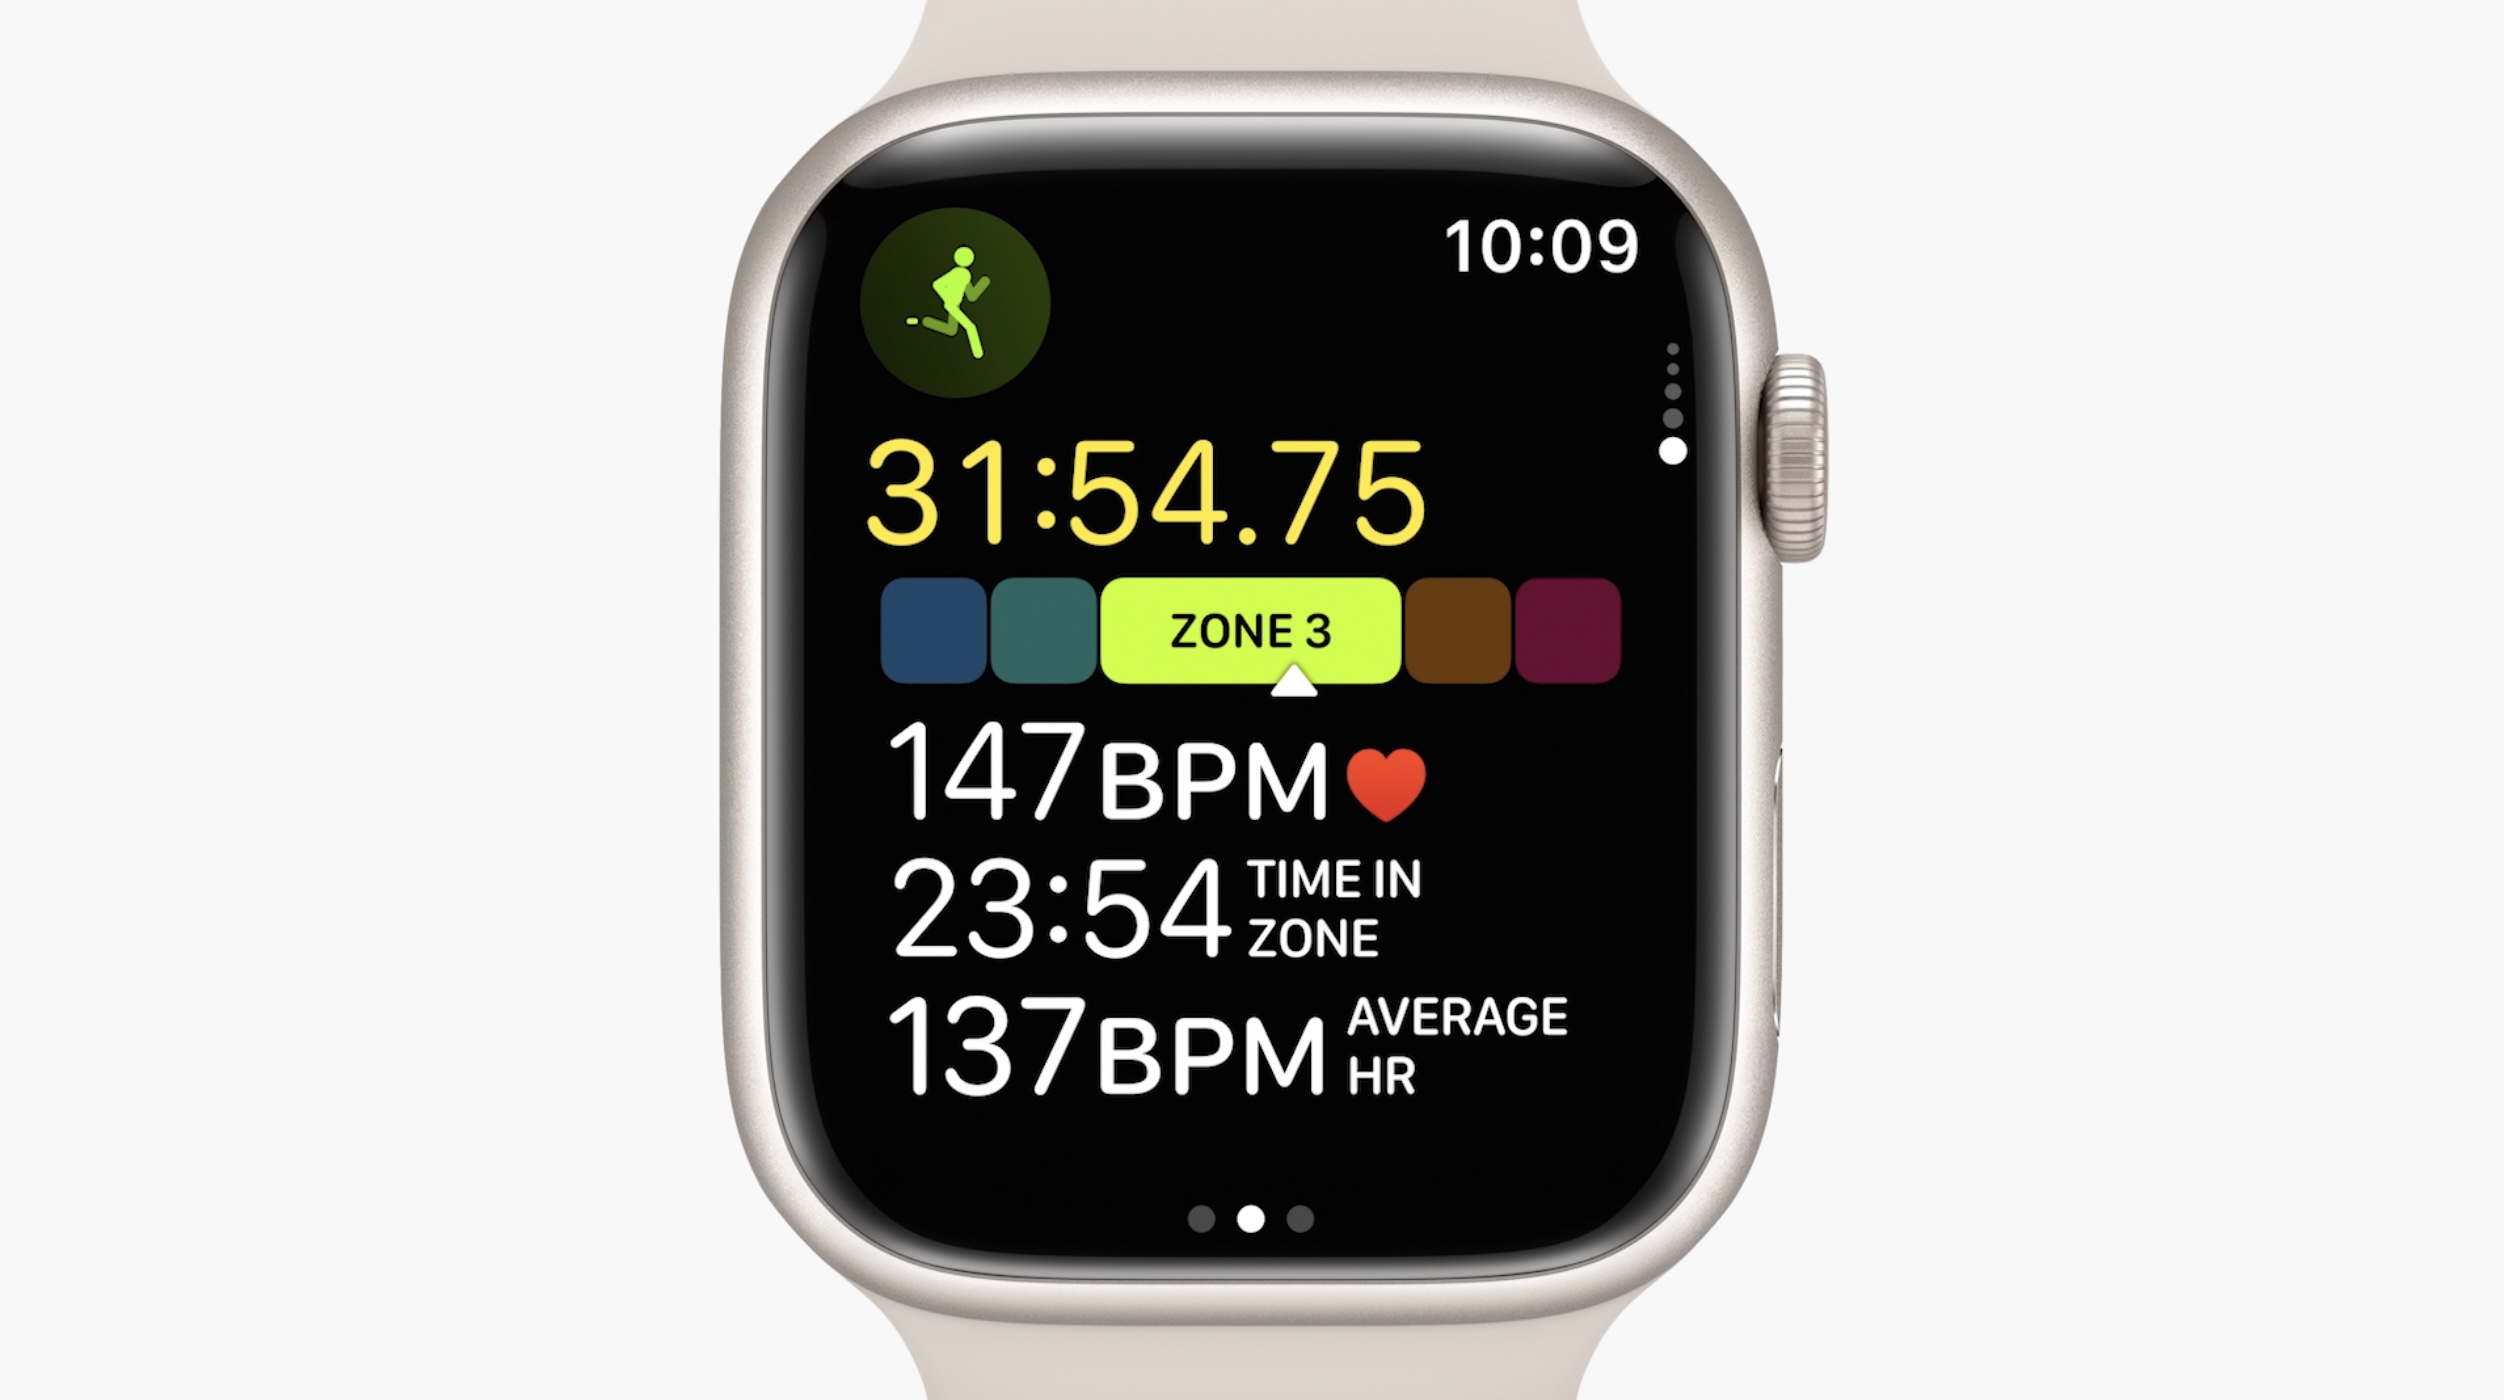 Apple Watch workout tips from Apple’s fitness expert Jay Blahnik